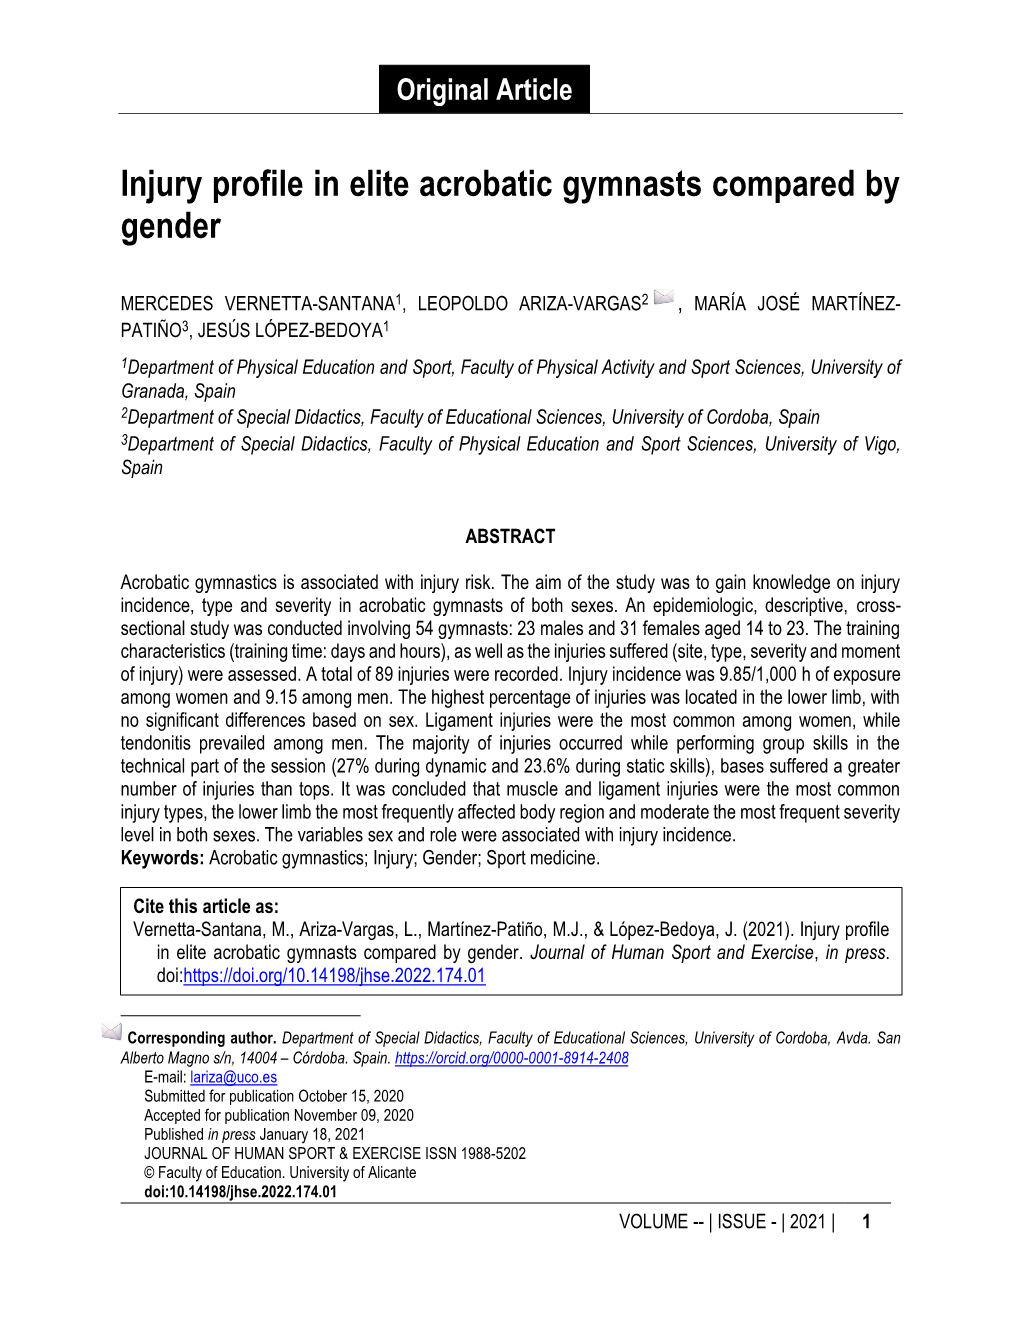 Injury Profile in Elite Acrobatic Gymnasts Compared by Gender